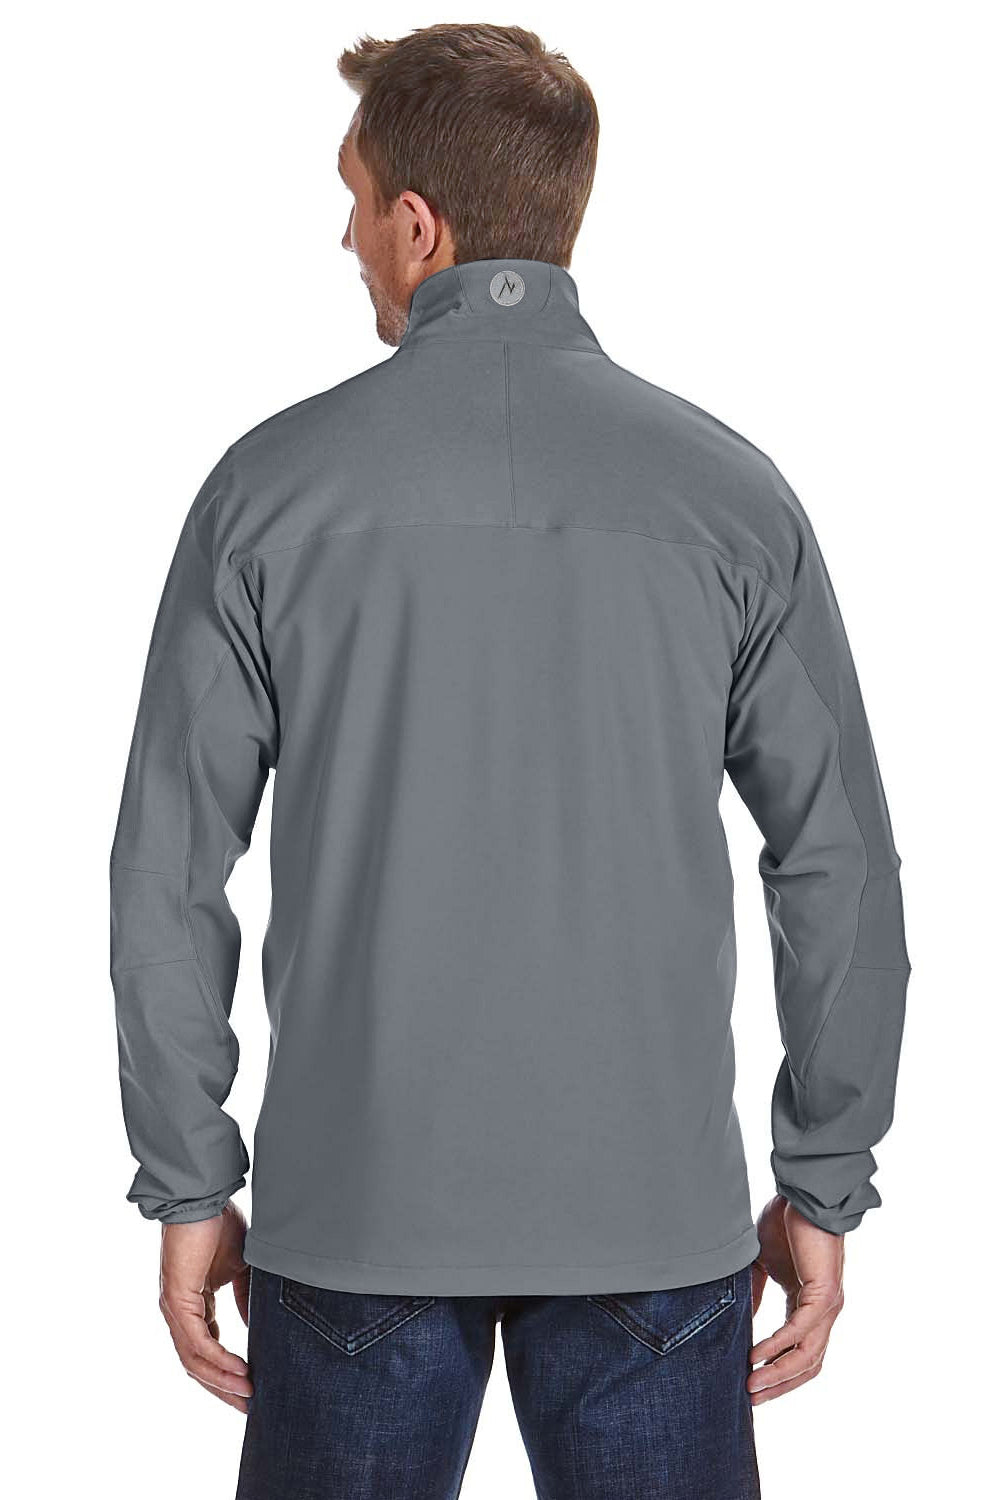 Marmot 98260 Mens Tempo Water Resistant Full Zip Jacket Cinder Grey Back